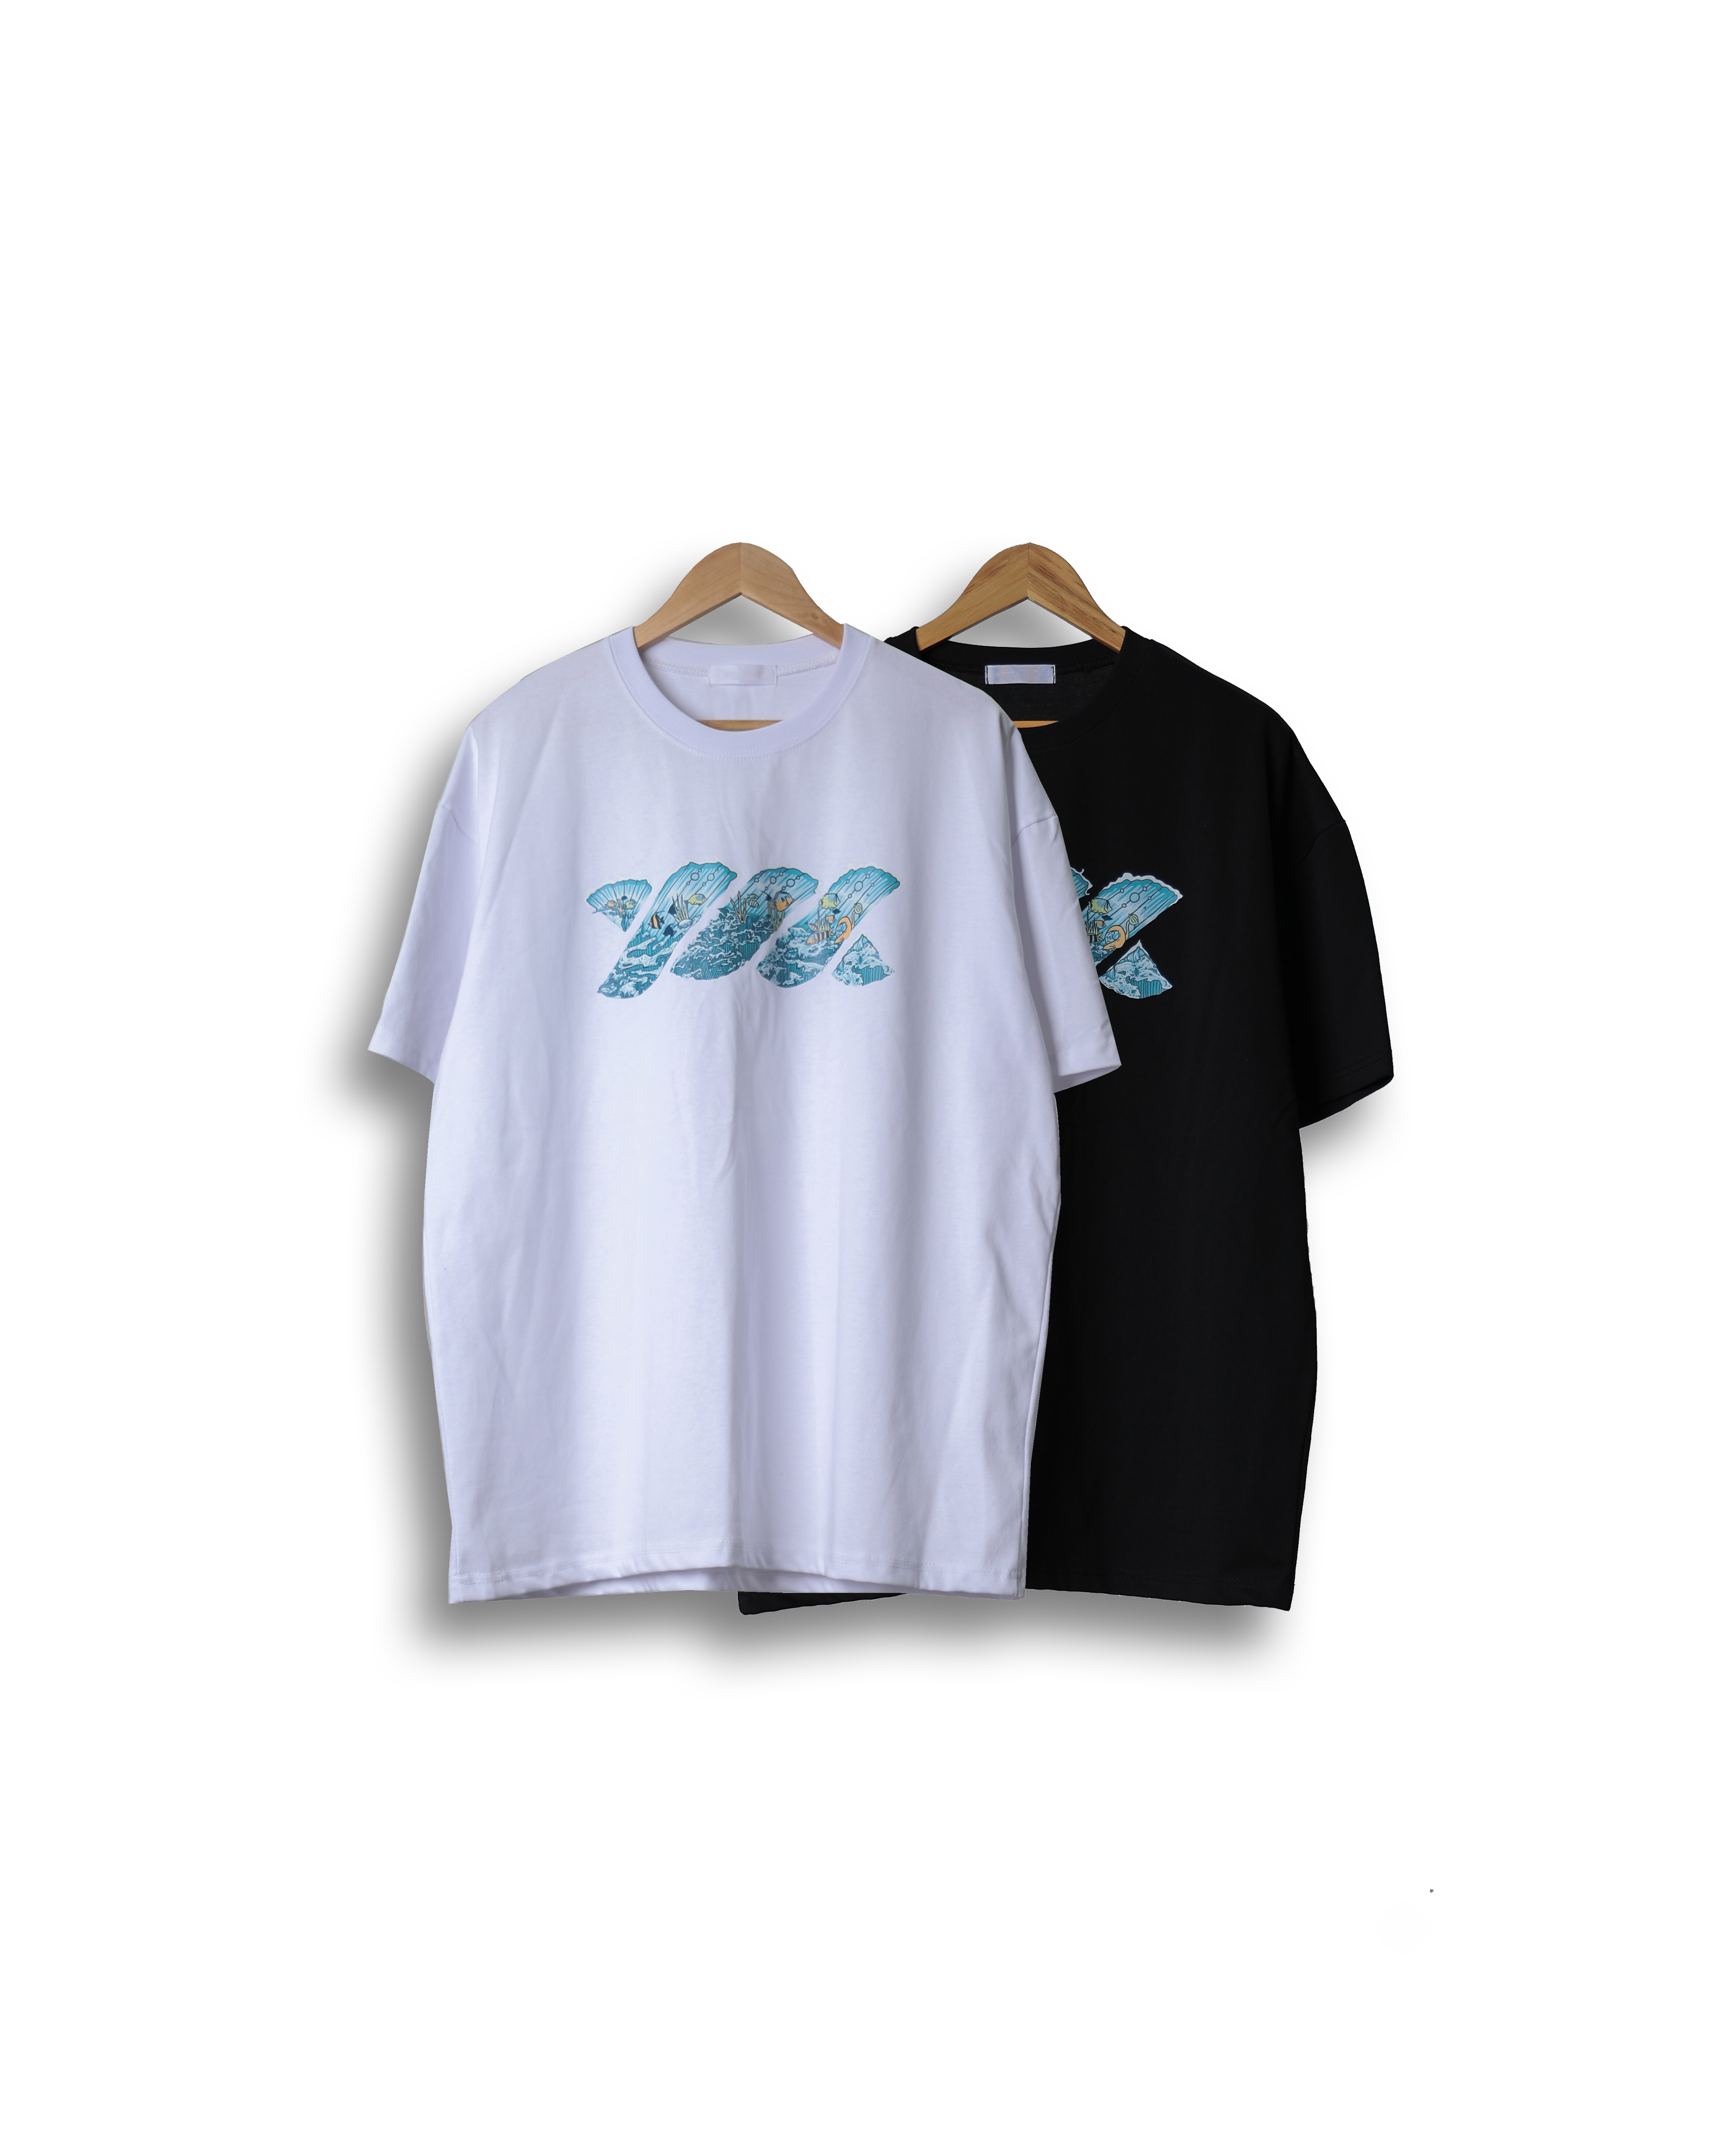 CRECNT WAVE Printed T Shirts (Black/White)